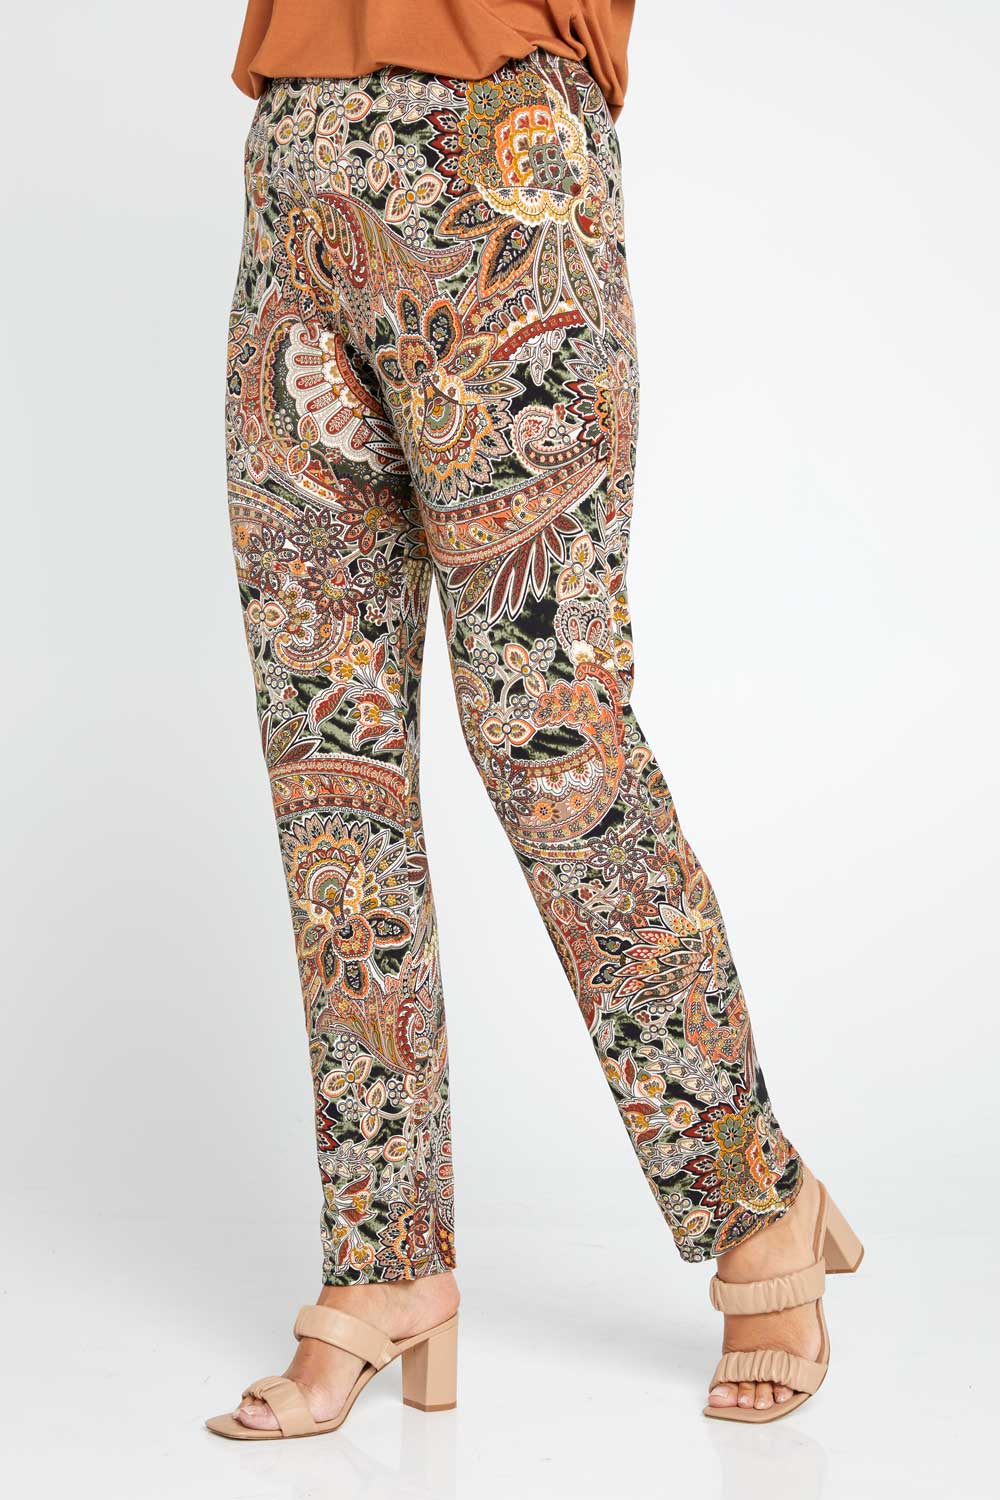 Gianna Printed Pants - 70s Paisley | Women's Printed Pants | TULIO ...